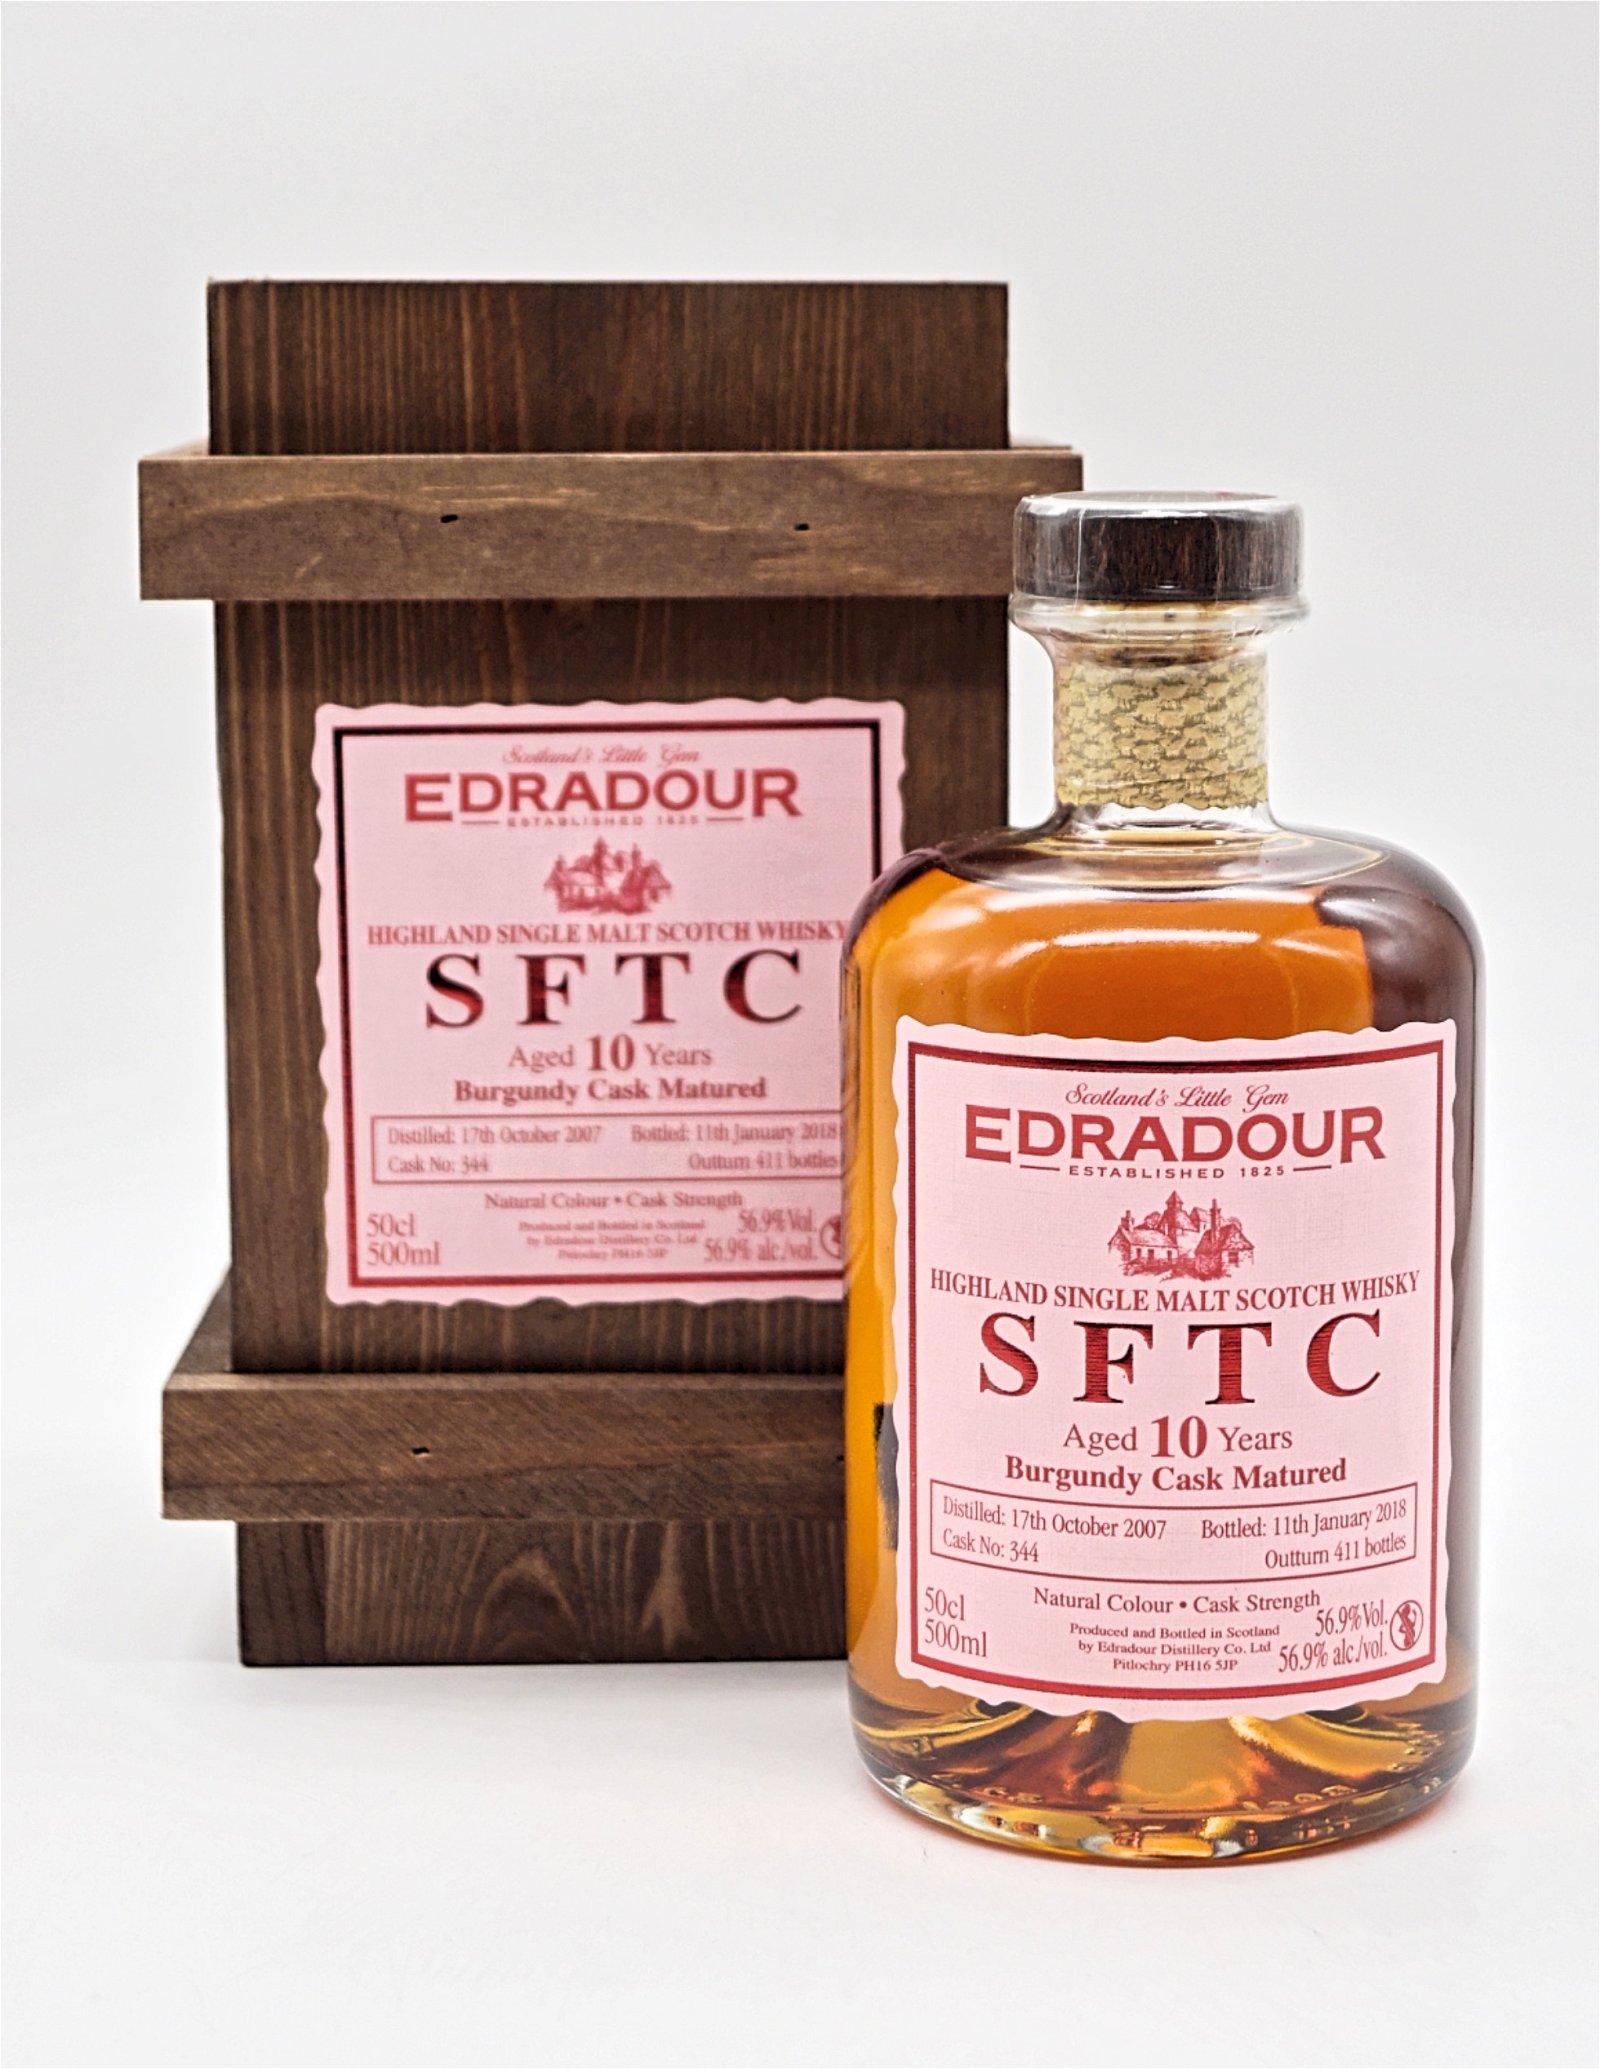 Edradour 10 Jahre 2007/2018 SFTC Burgundy Cask Matured Highland Single Malt Scotch Whisky